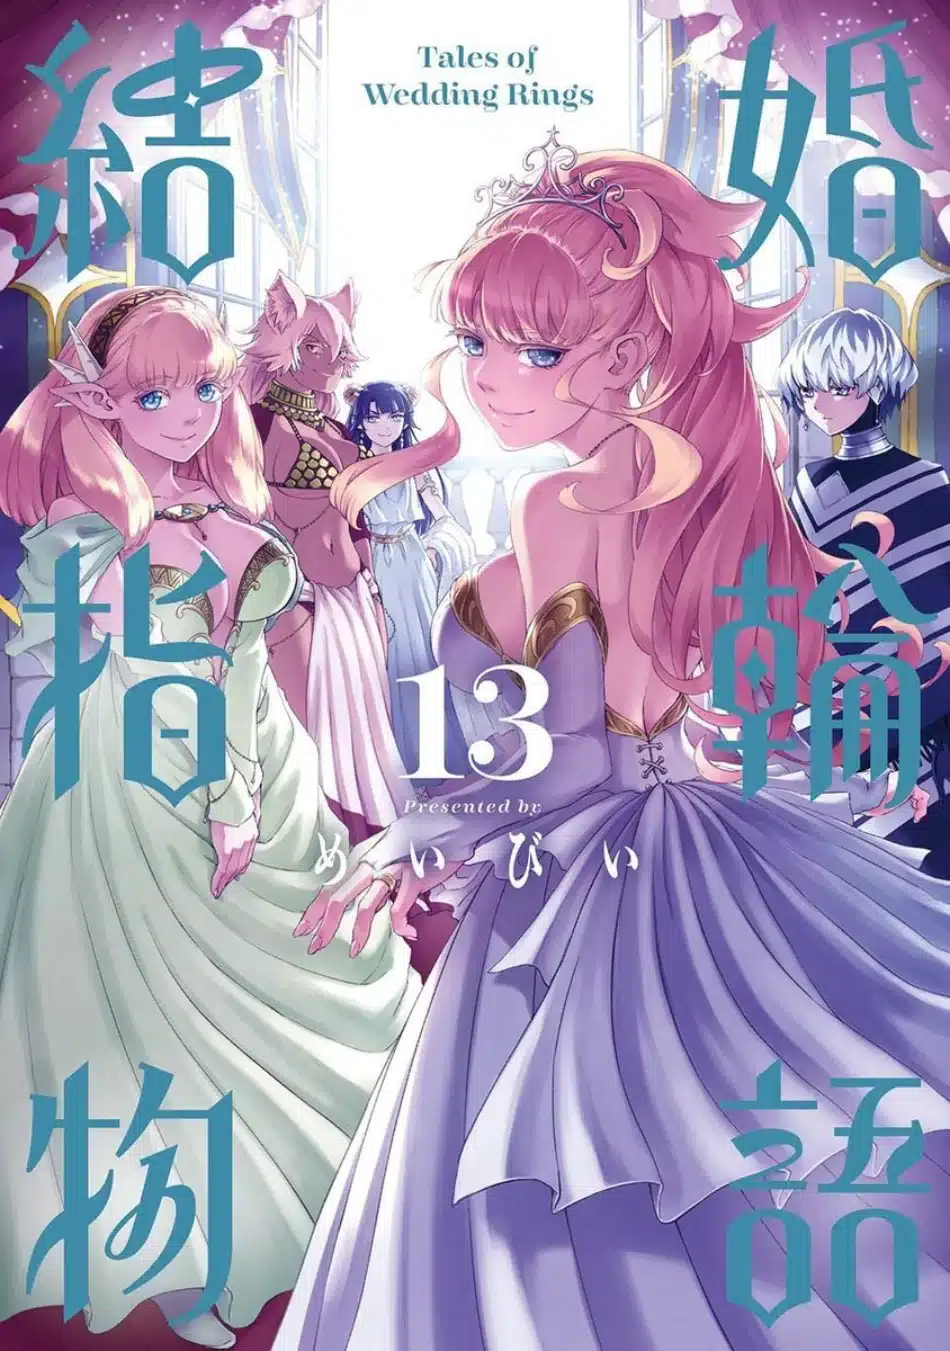 El Manga Tales Of Wedding Rings Esta Muy Cerca De Finalizar